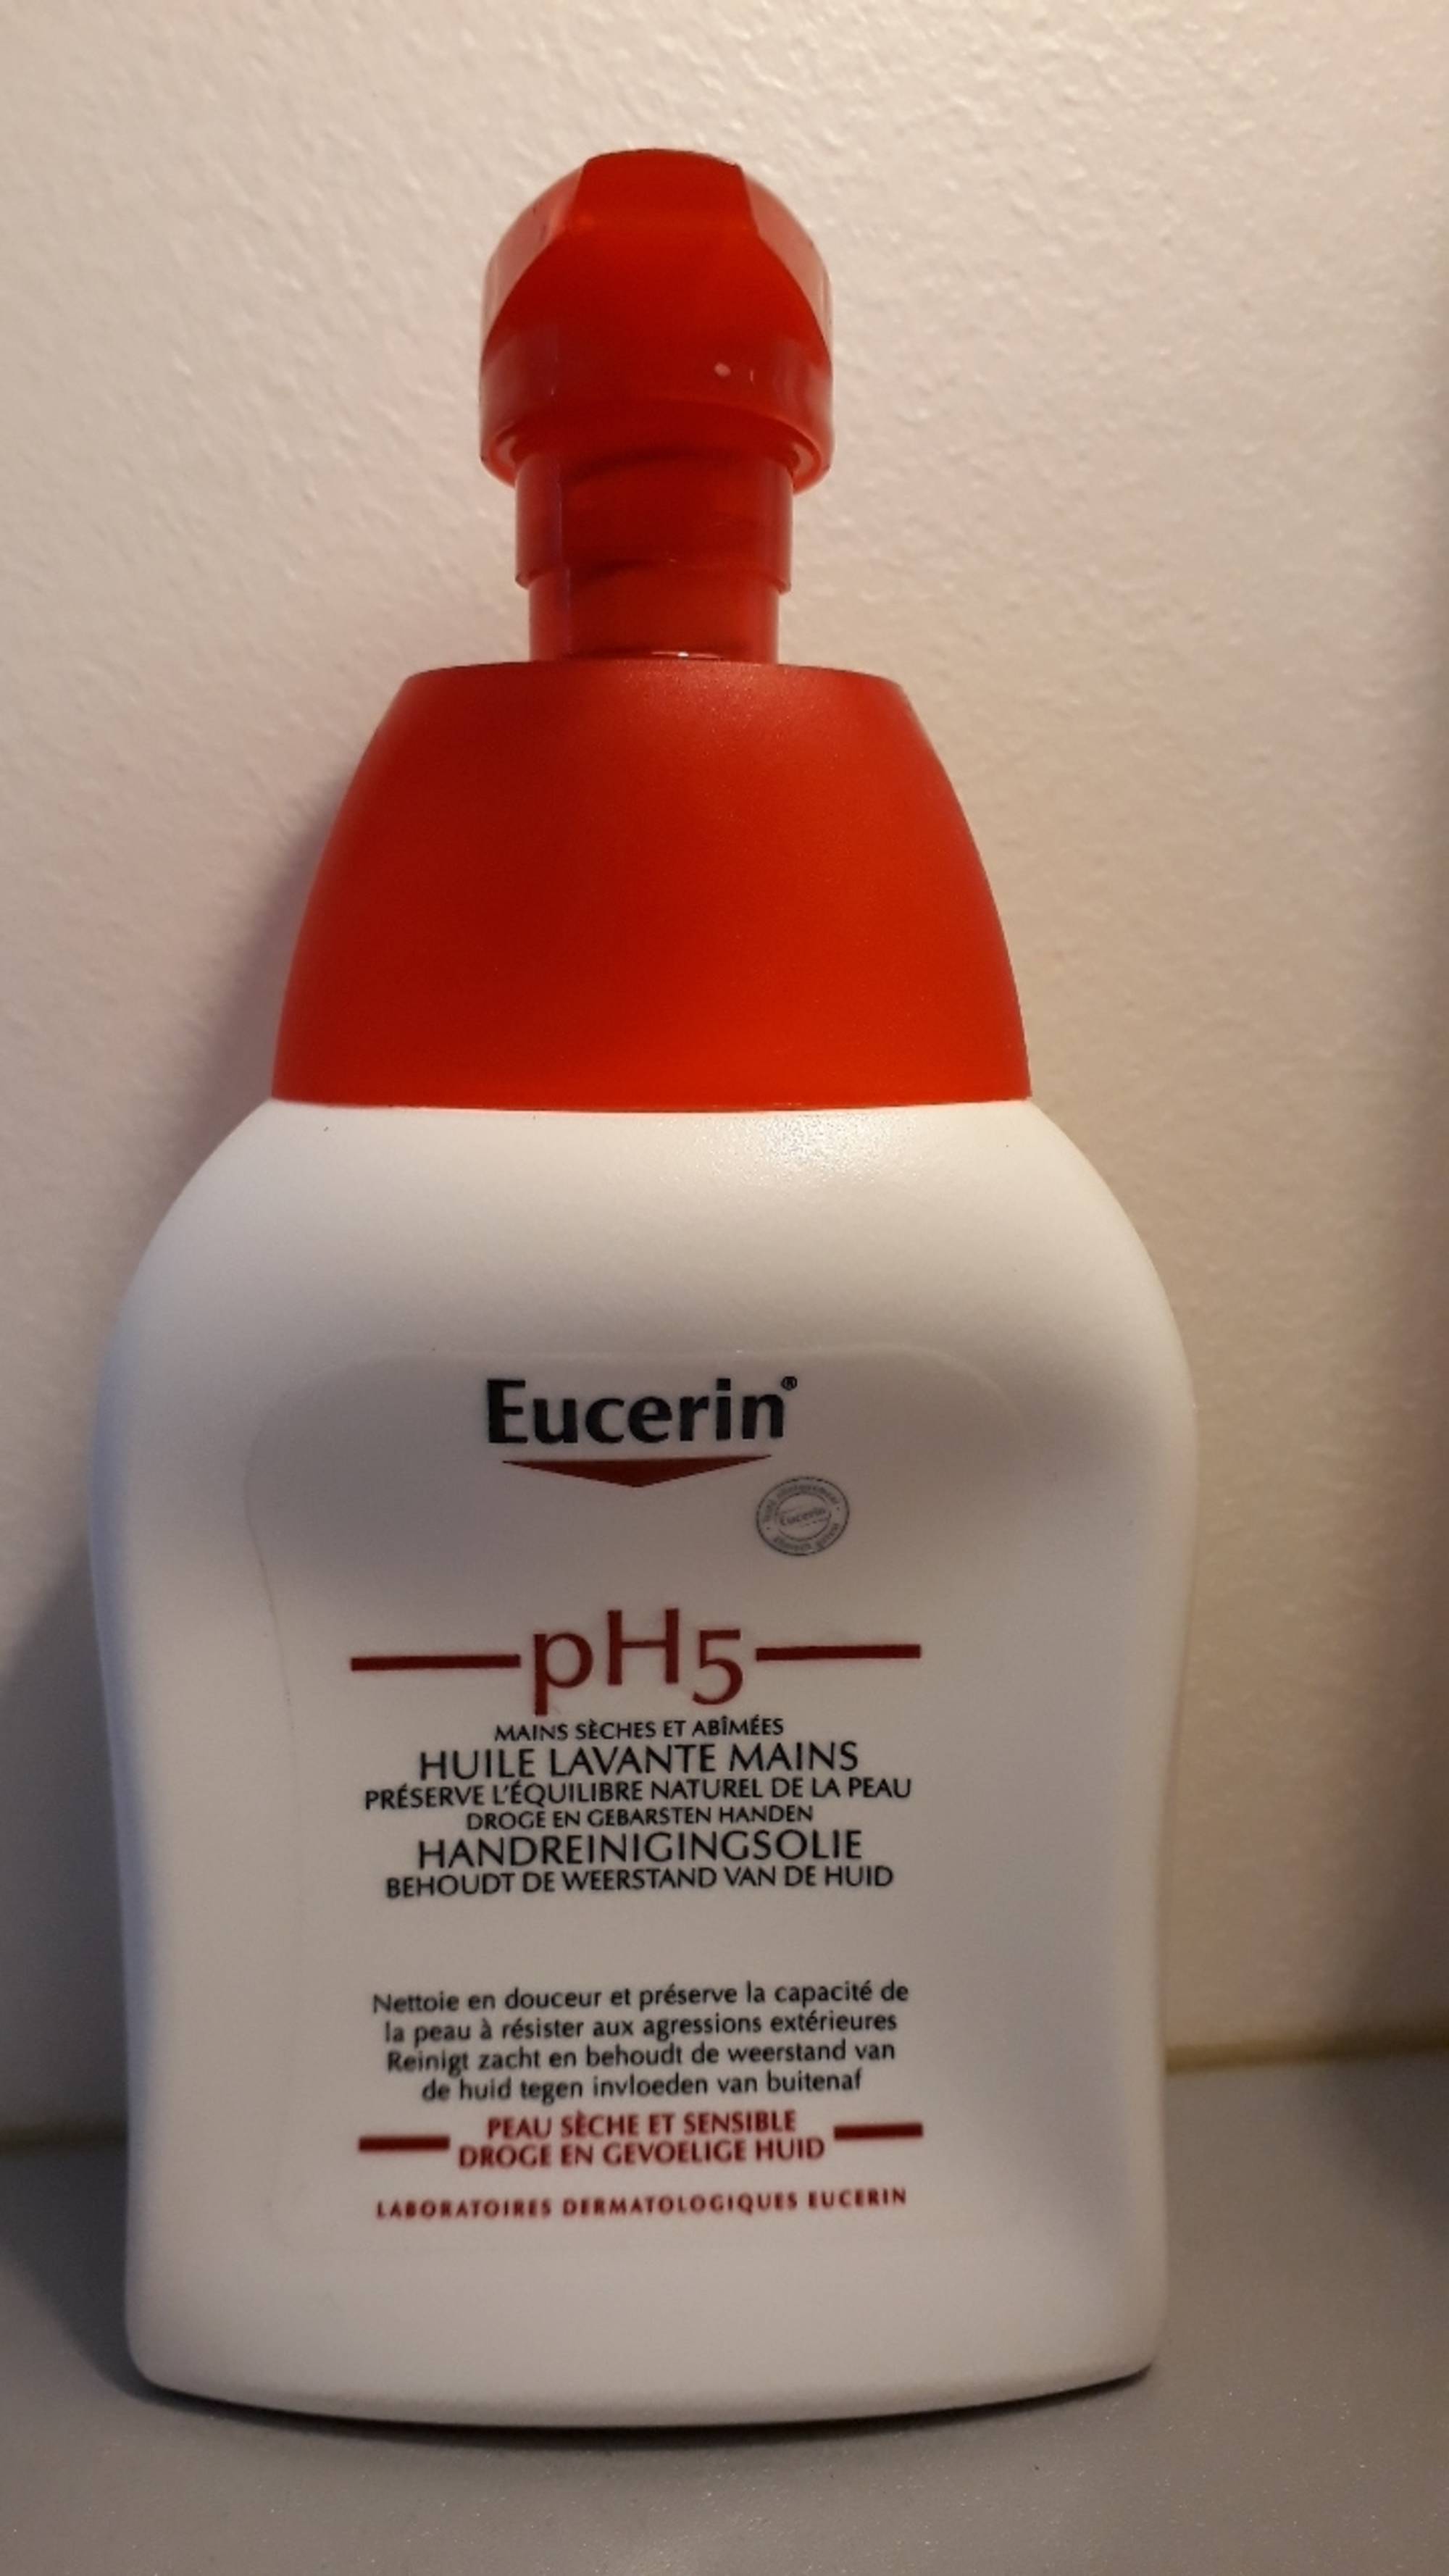 EUCERIN - PH5 - Huile lavante mains